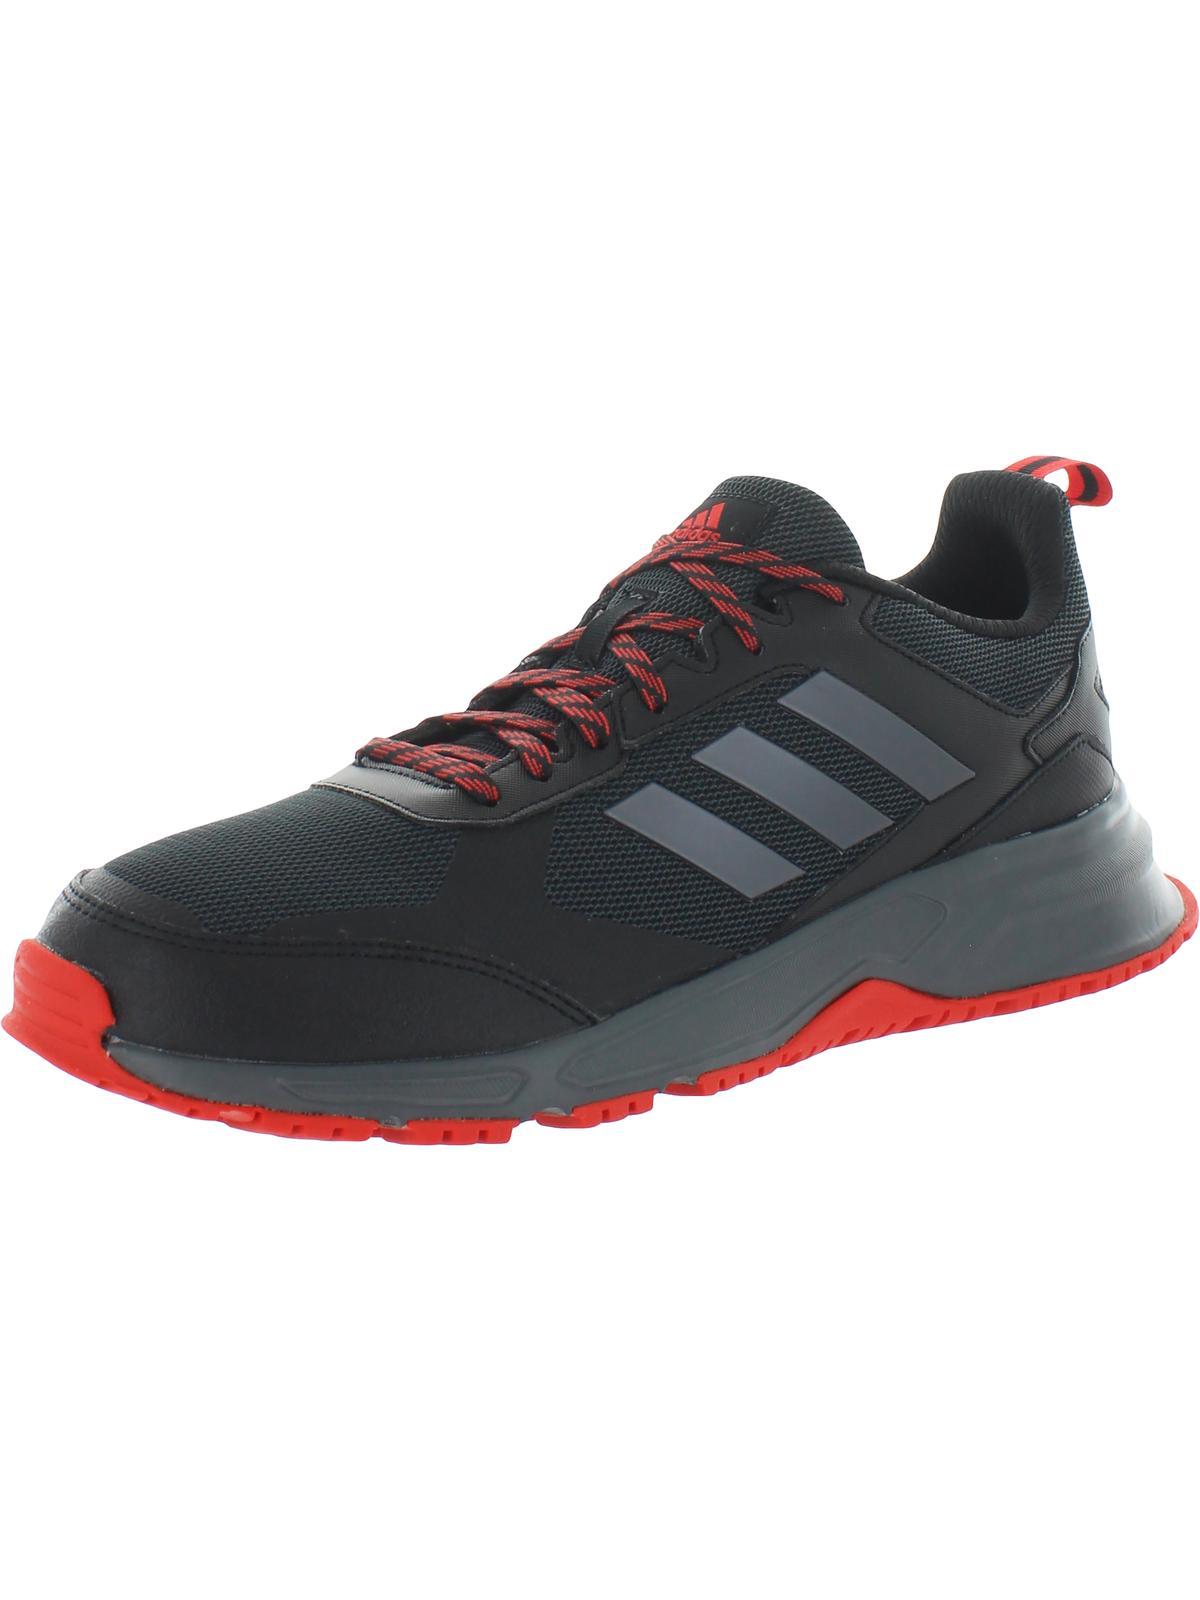 Adidas Men's Rockadia Trail Running Shoe Top Sellers | bellvalefarms.com